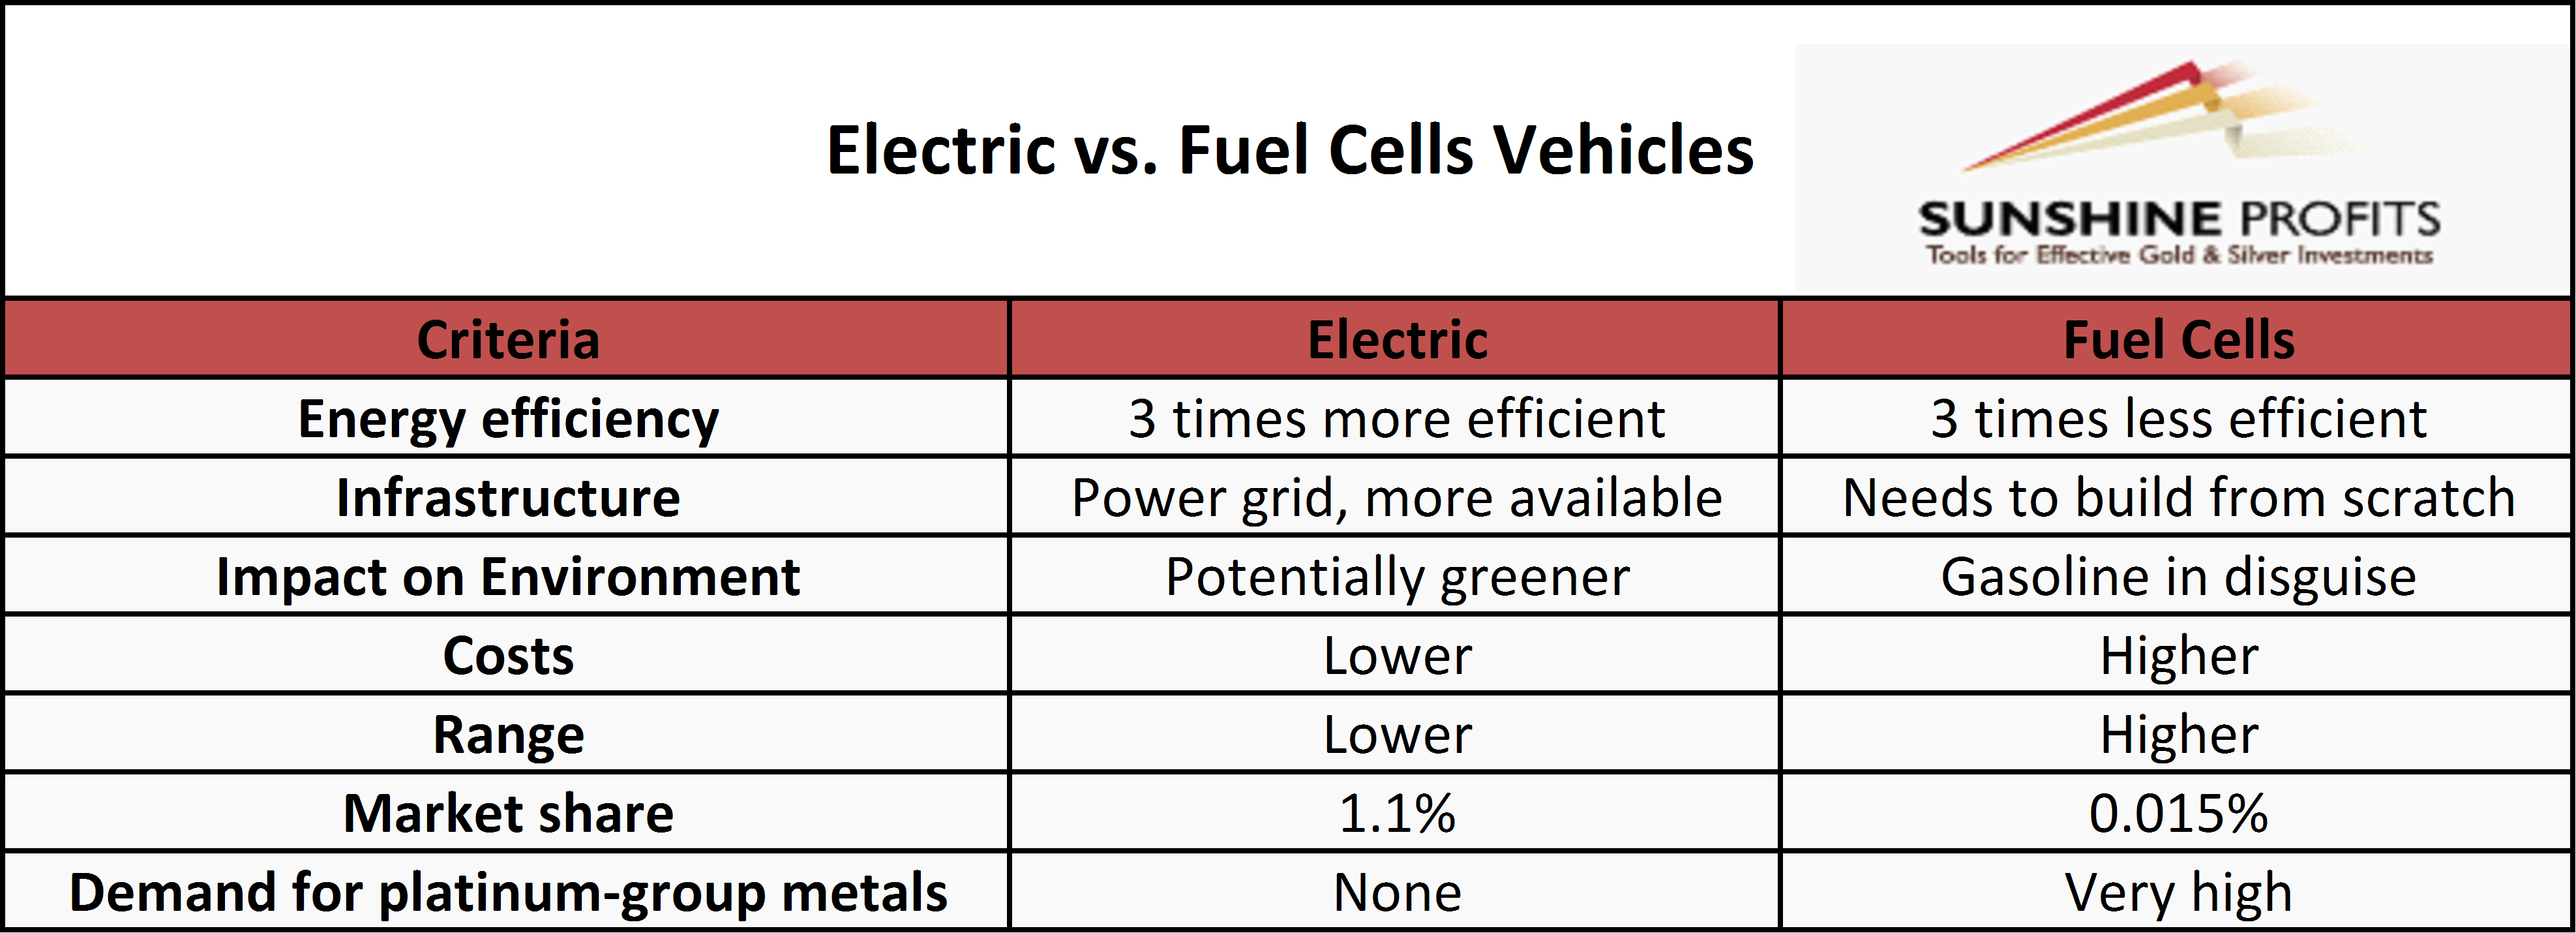 will fuel cells vehicles save platinum and palladium